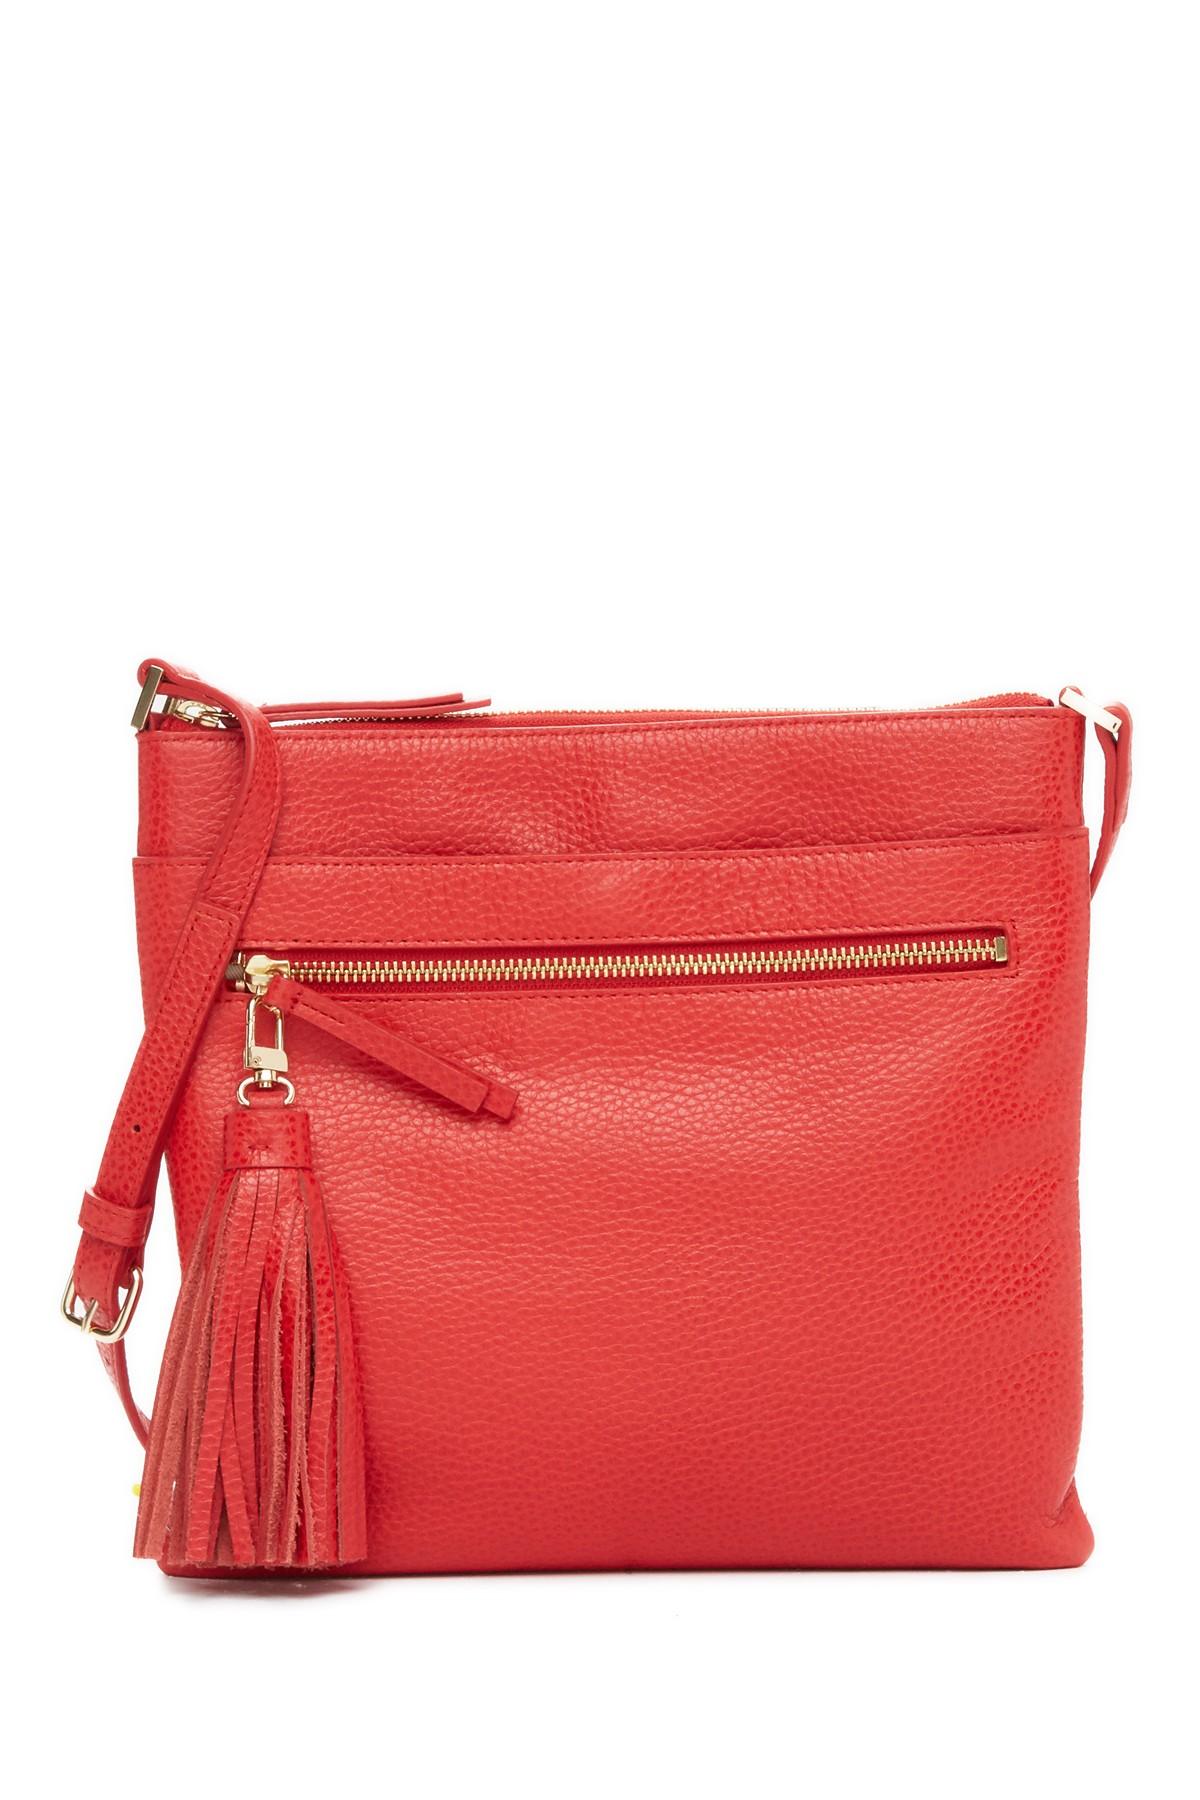 Halogen Tasseled Leather Crossbody Bag in Red - Lyst